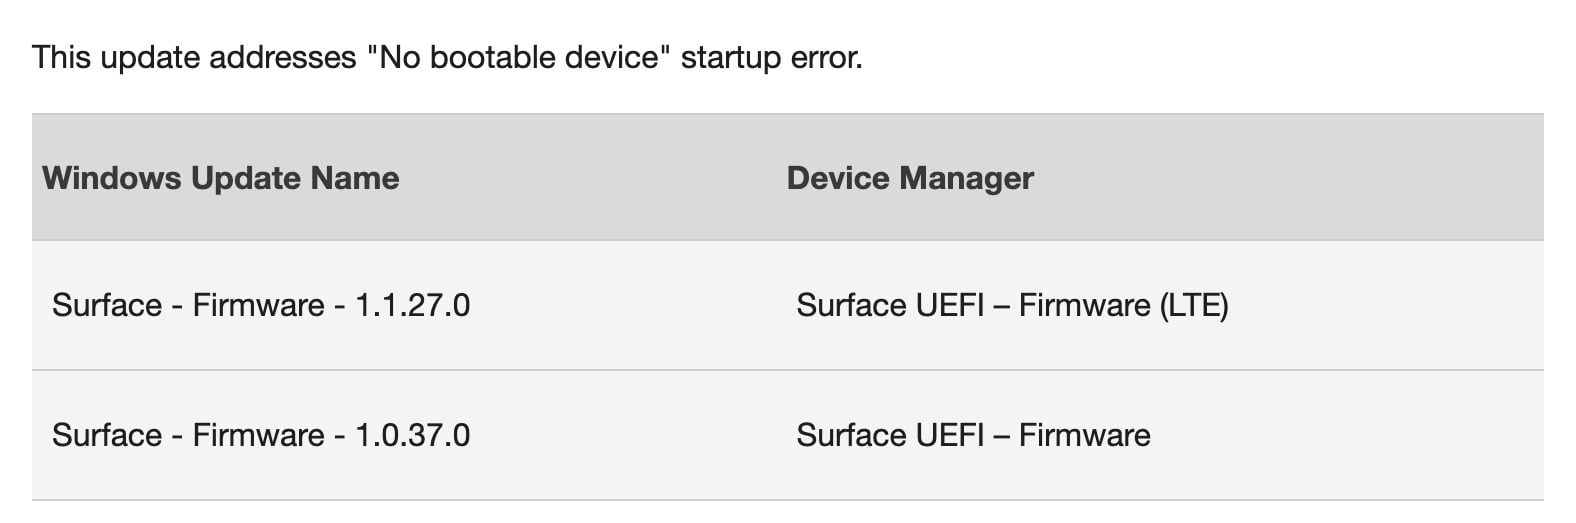 Microsoft Surface Go 修復了“無可啟動設備”啟動錯誤